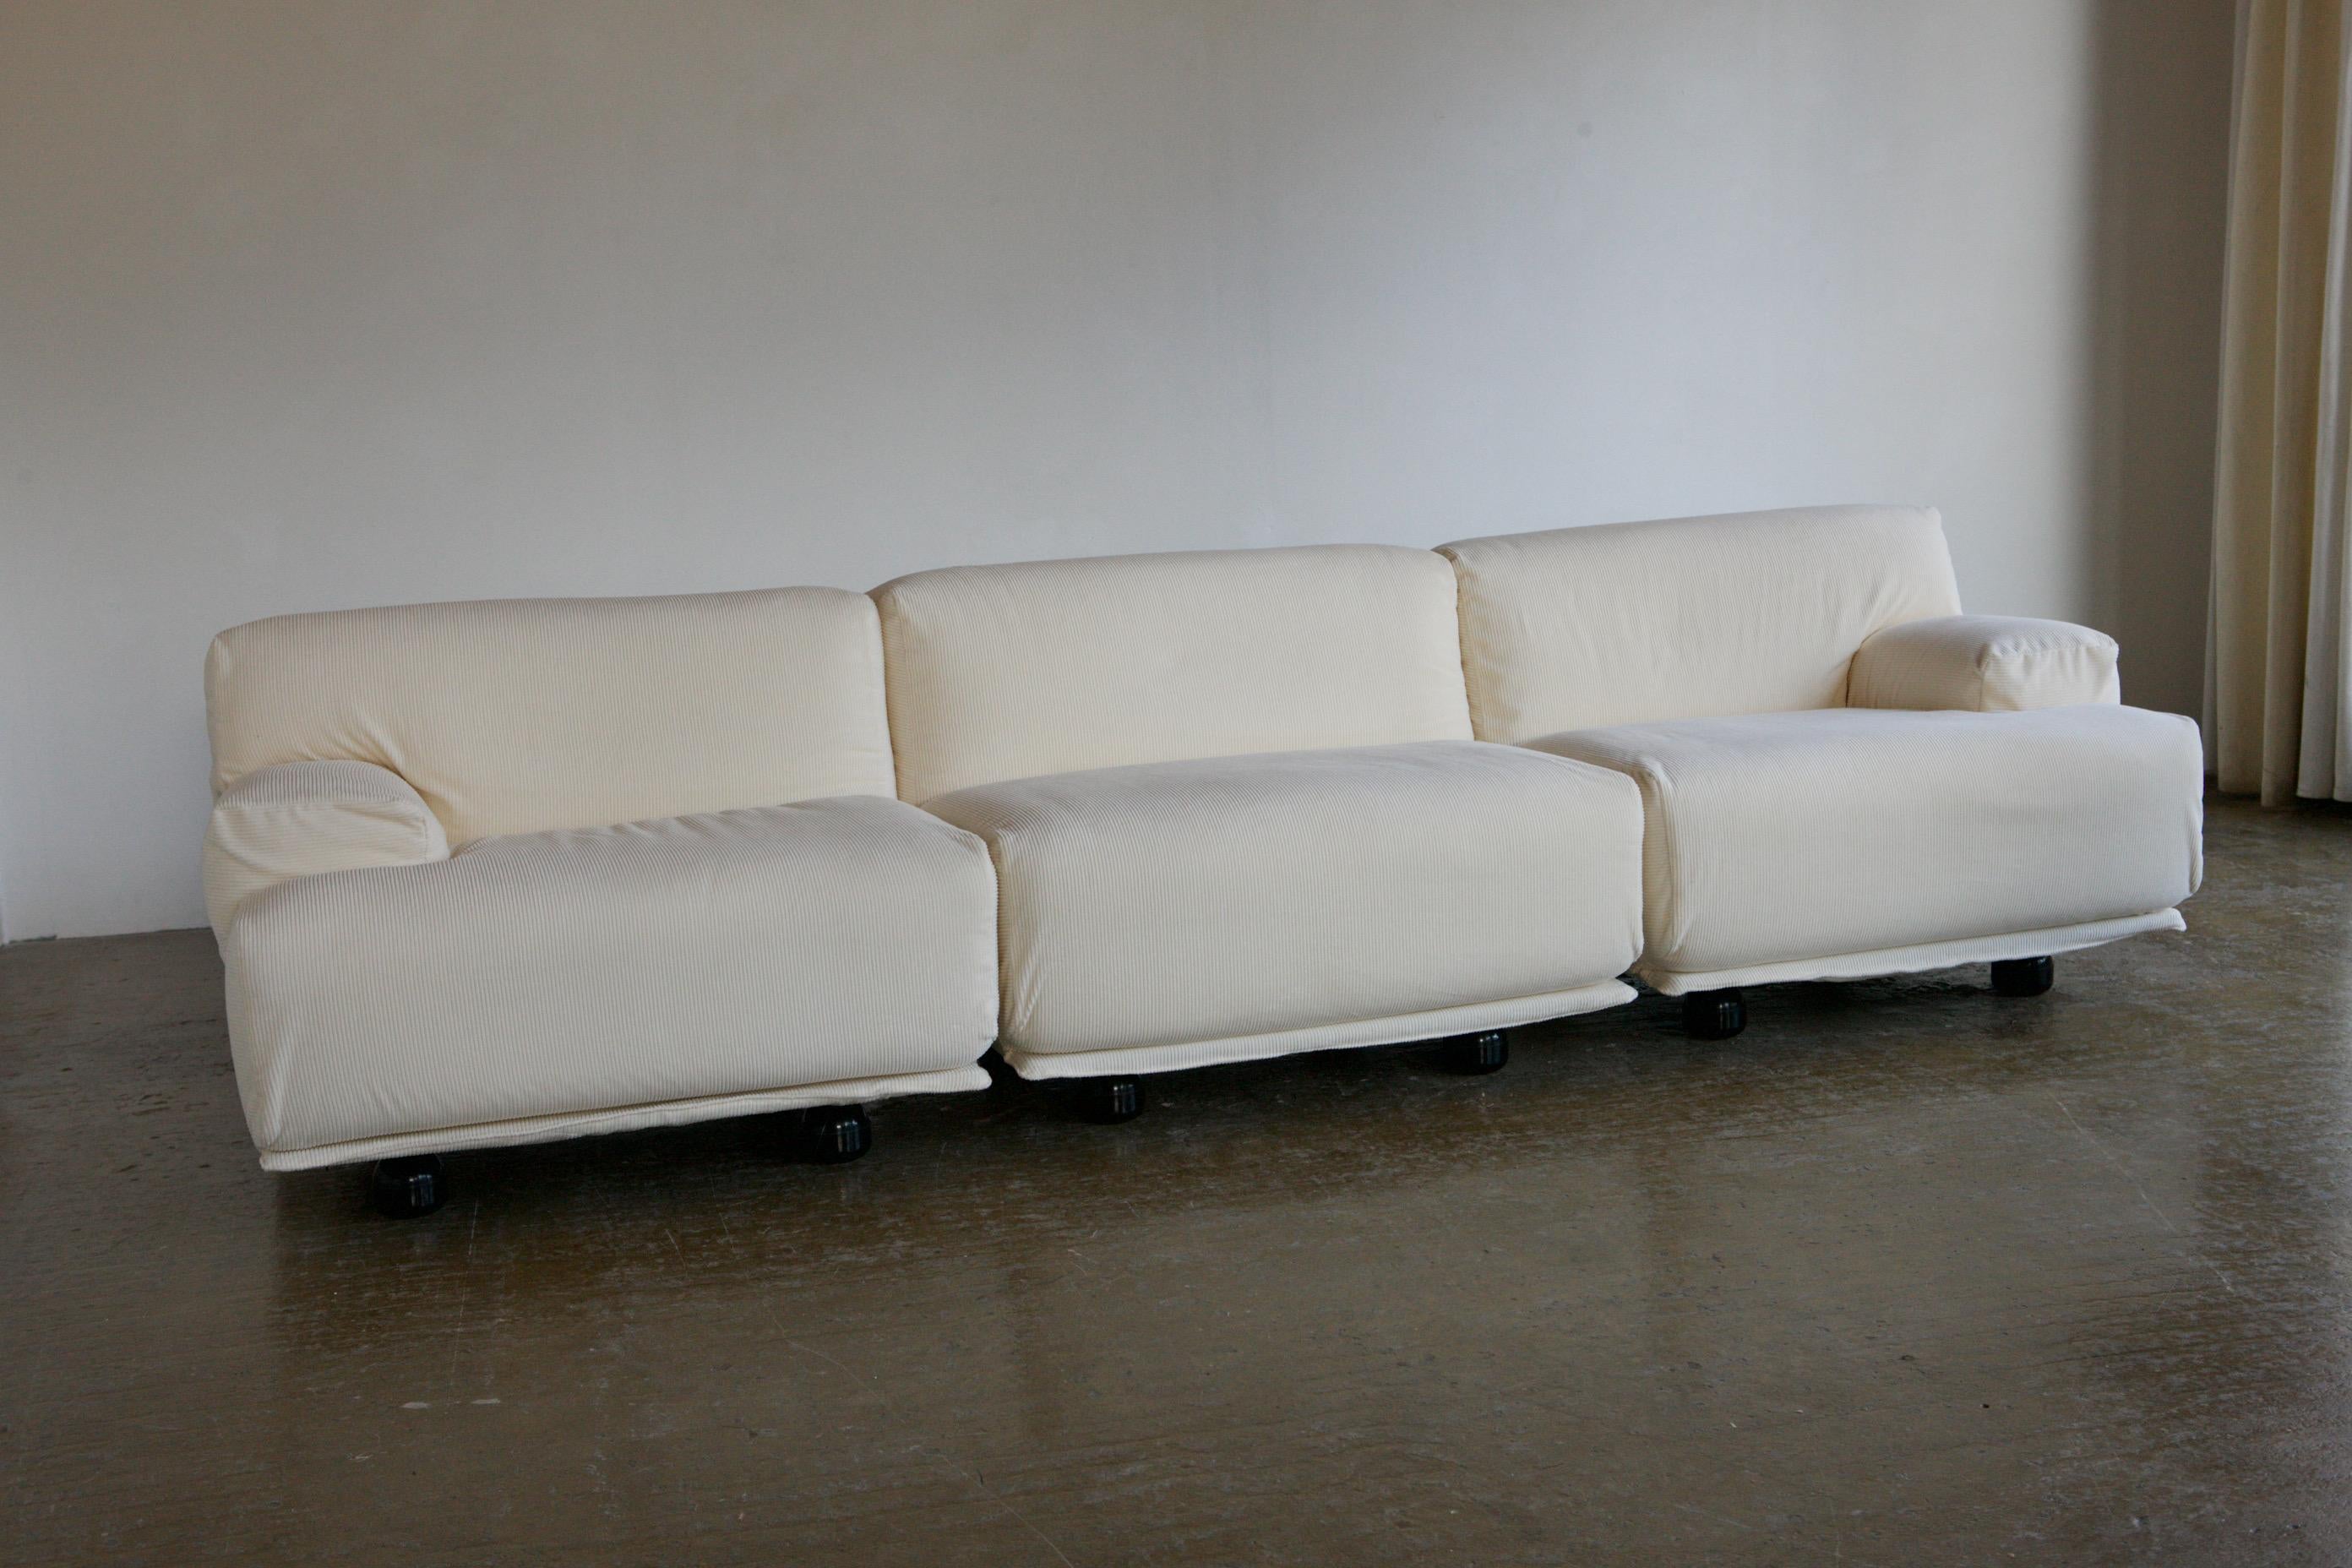 Mid-Century Modern Sofa 